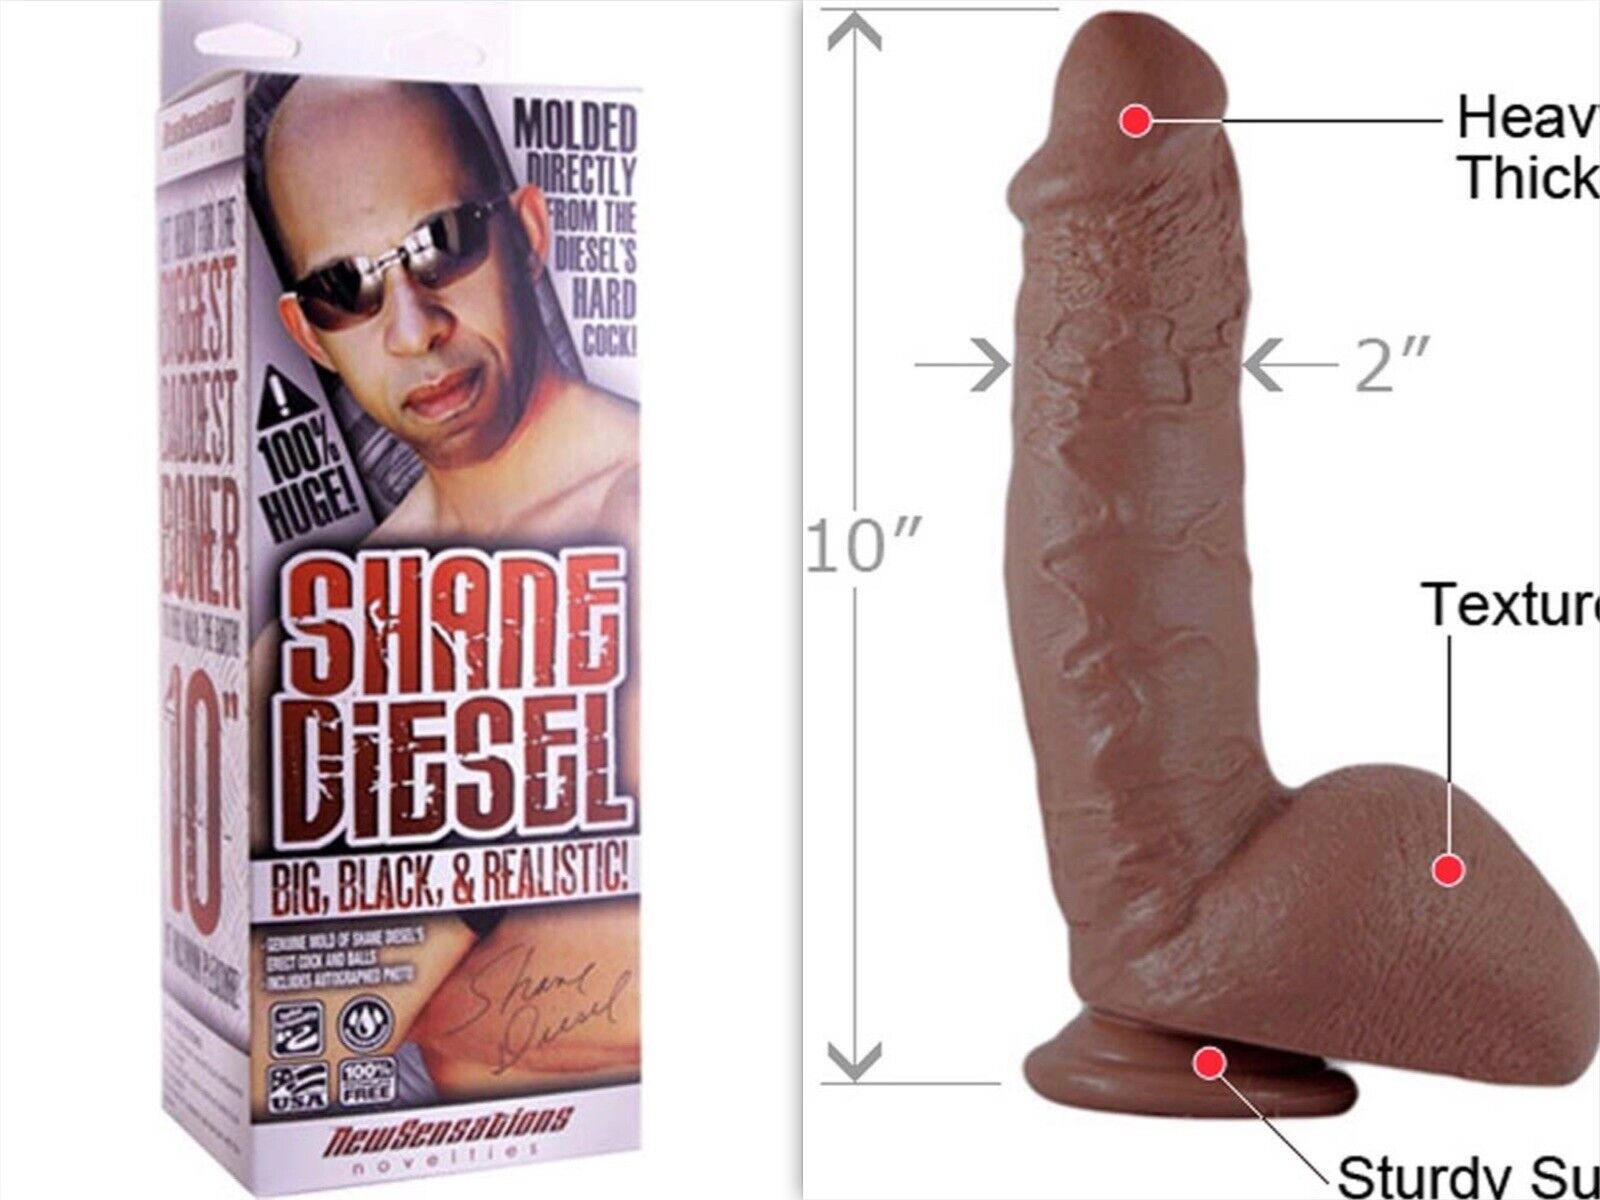 Shane Diesel Penis Size ebony sex